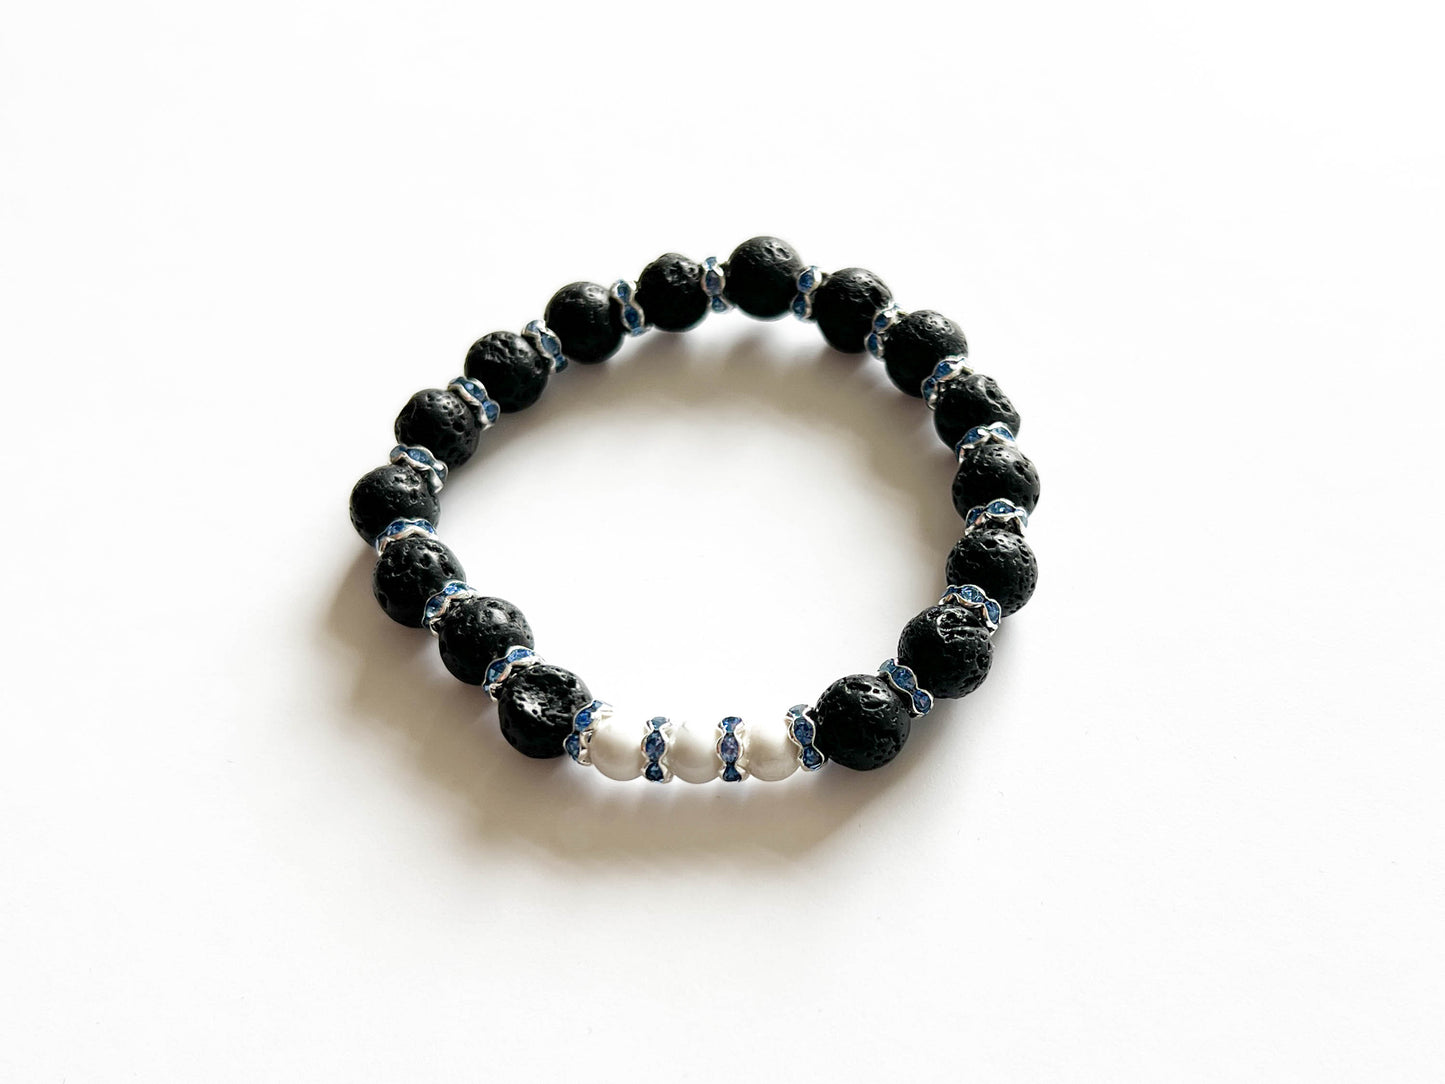 Black Lava stone bead bracelet with blue rhinestones - stretch - essential oil diffuser jewellery